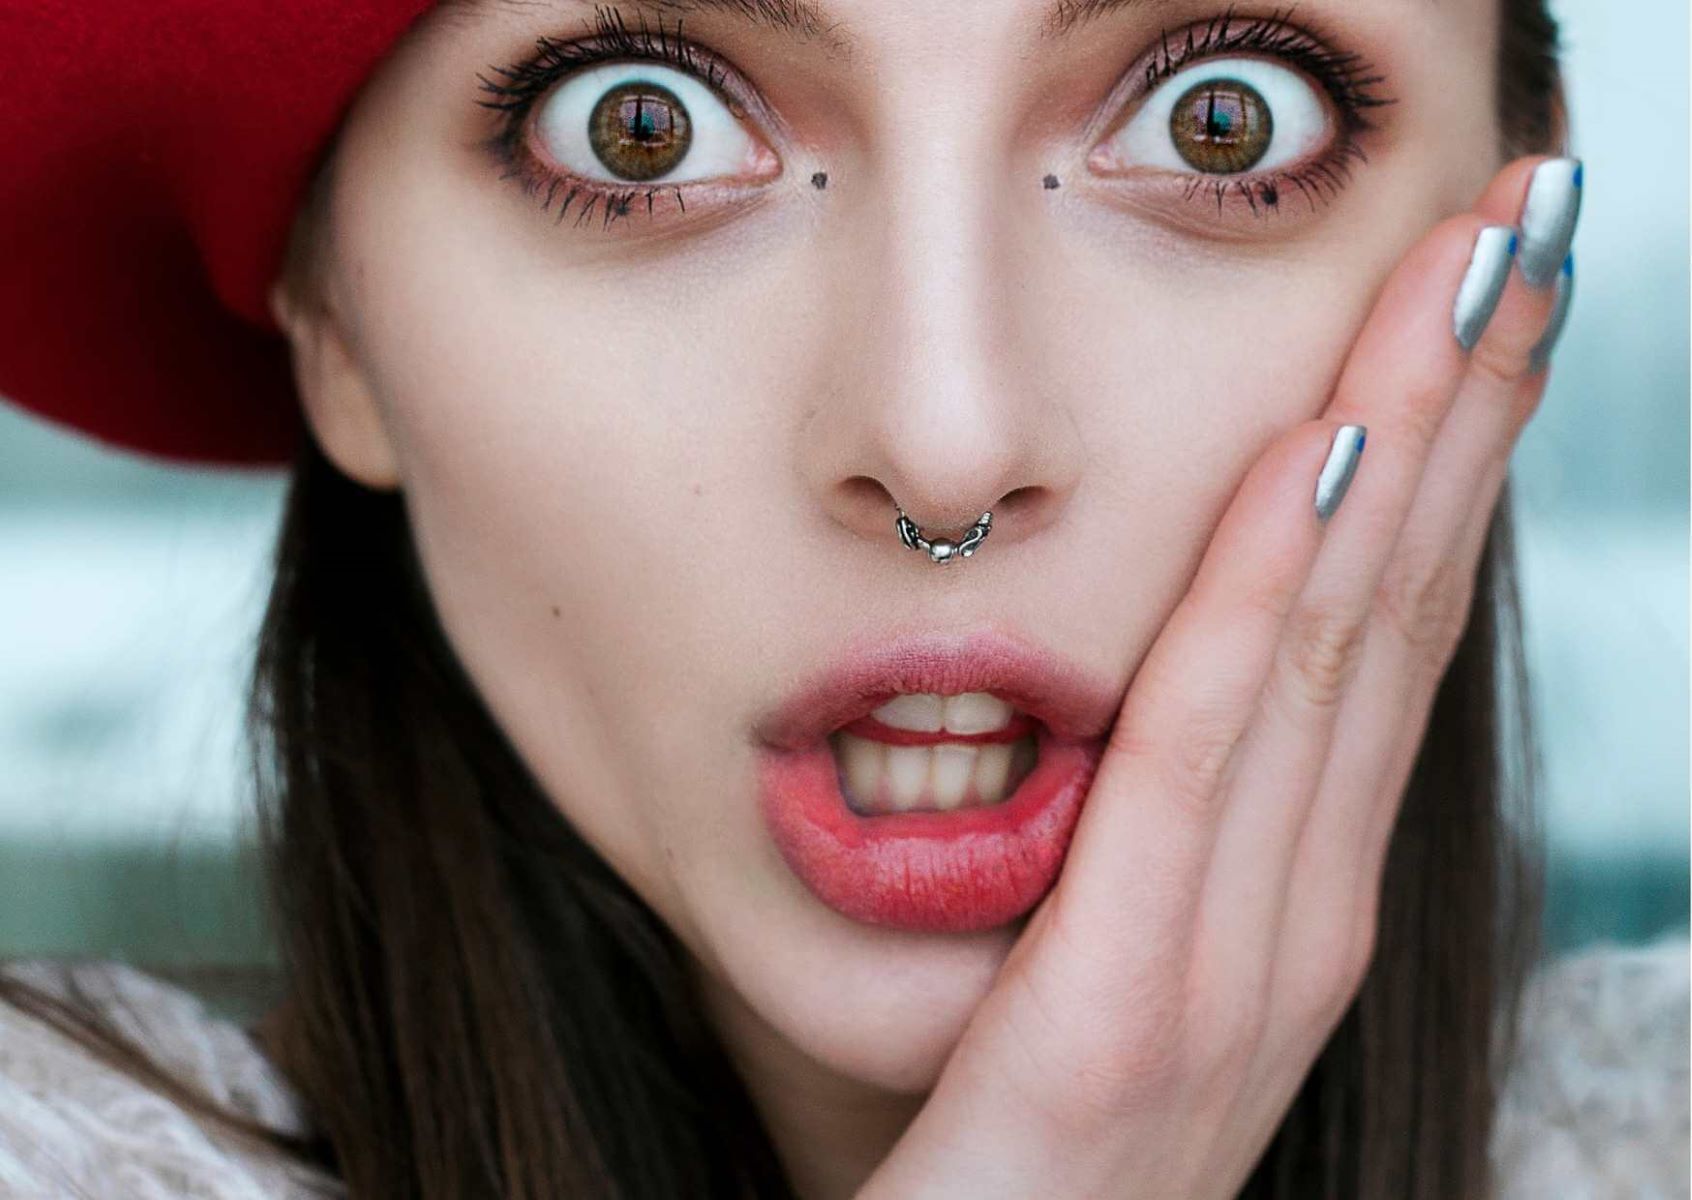 5 Genius Hacks To Make Your Fake Septum Piercing Look Totally Real!